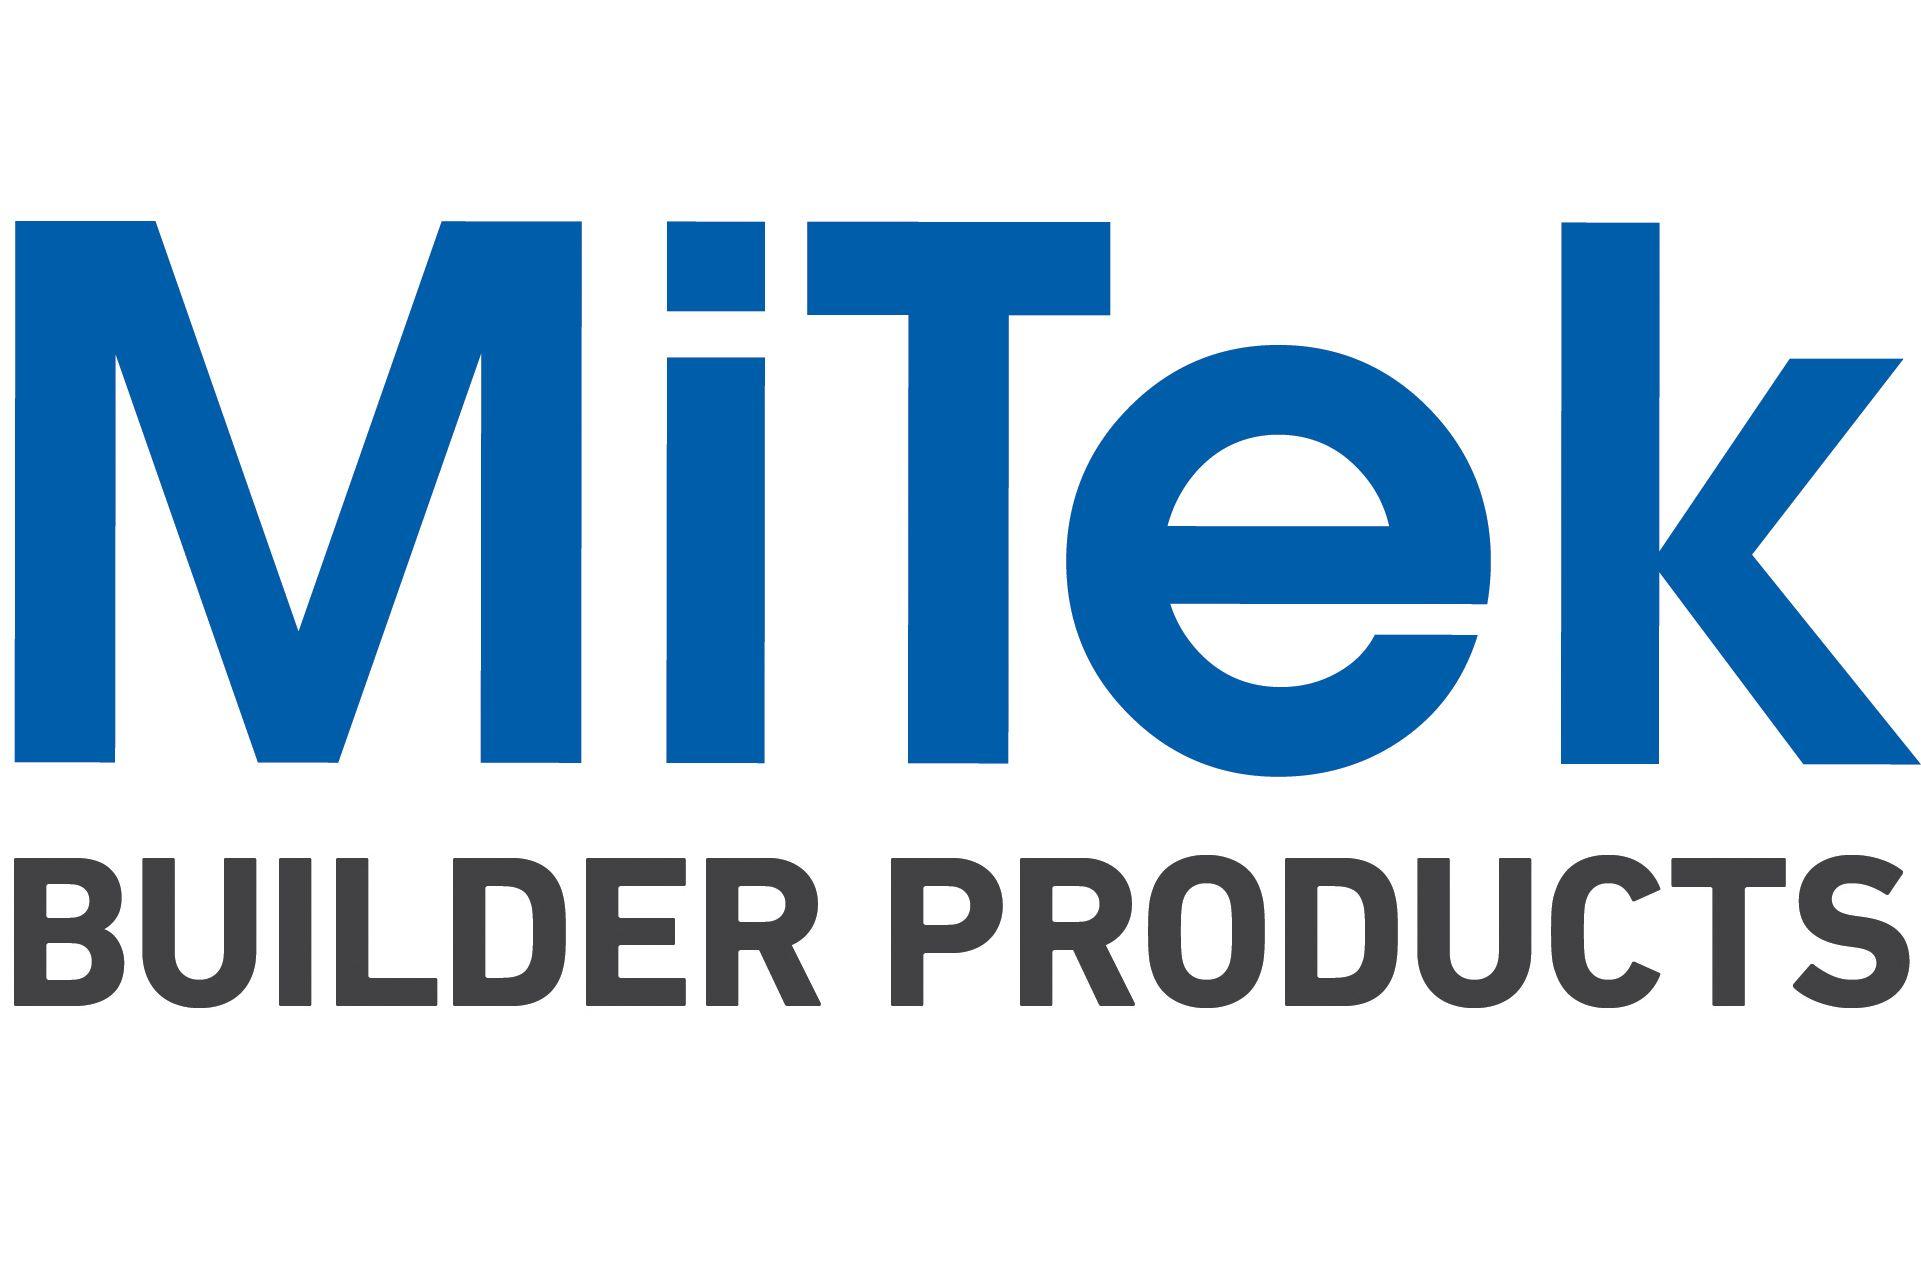 Mitek Logo - MiTek Introduces Builder Products Division. Remodeling. Products